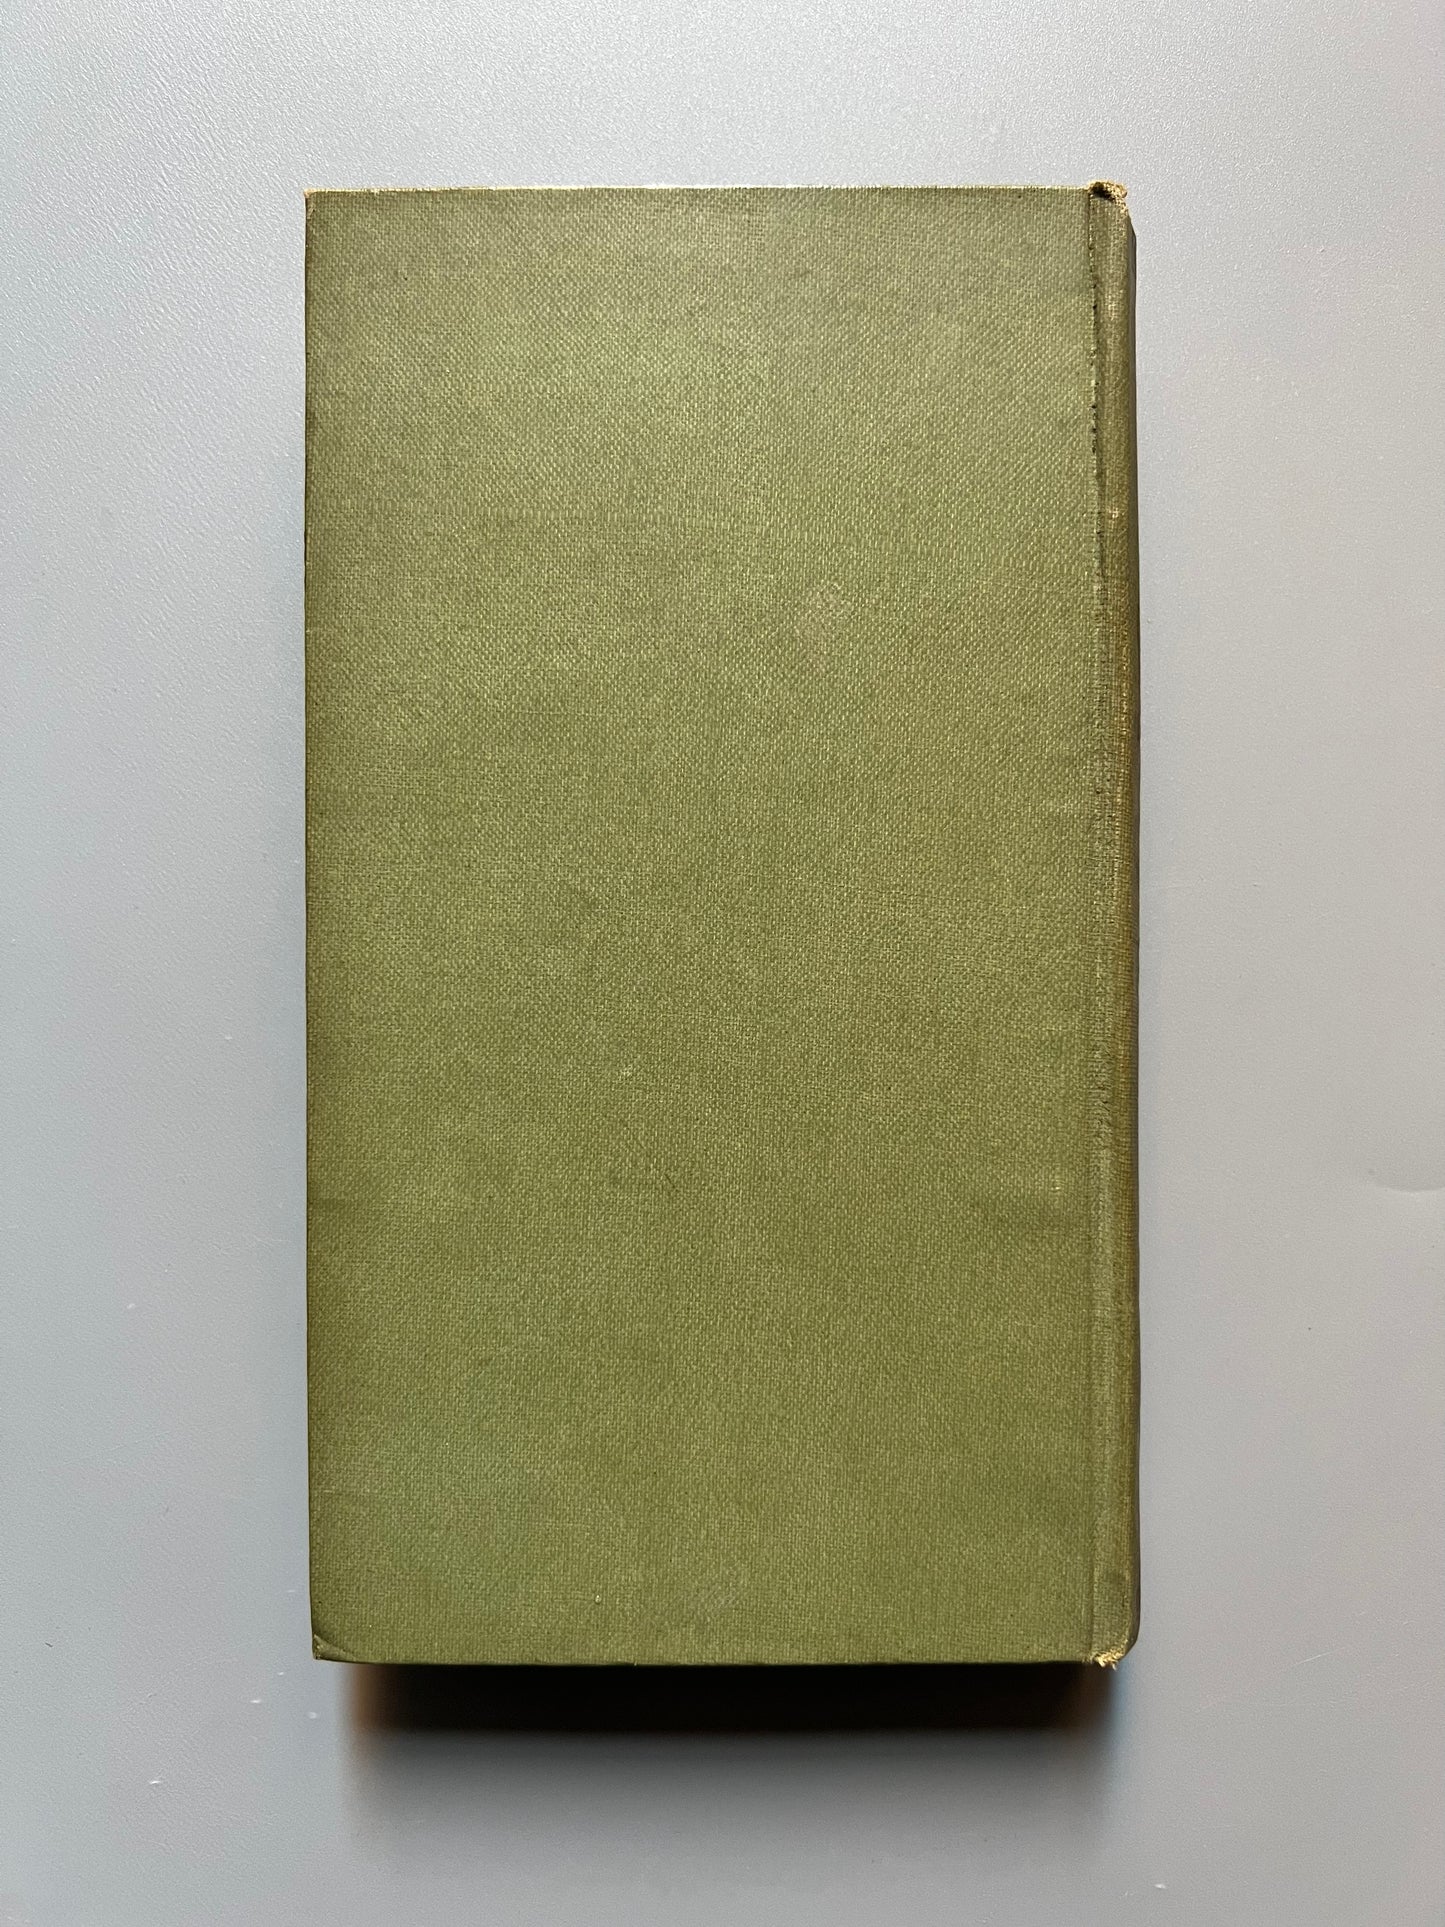 El reflujo, Robert Louis Stevenson y Lloyd Osbourne - E. Domenech editor, 1912